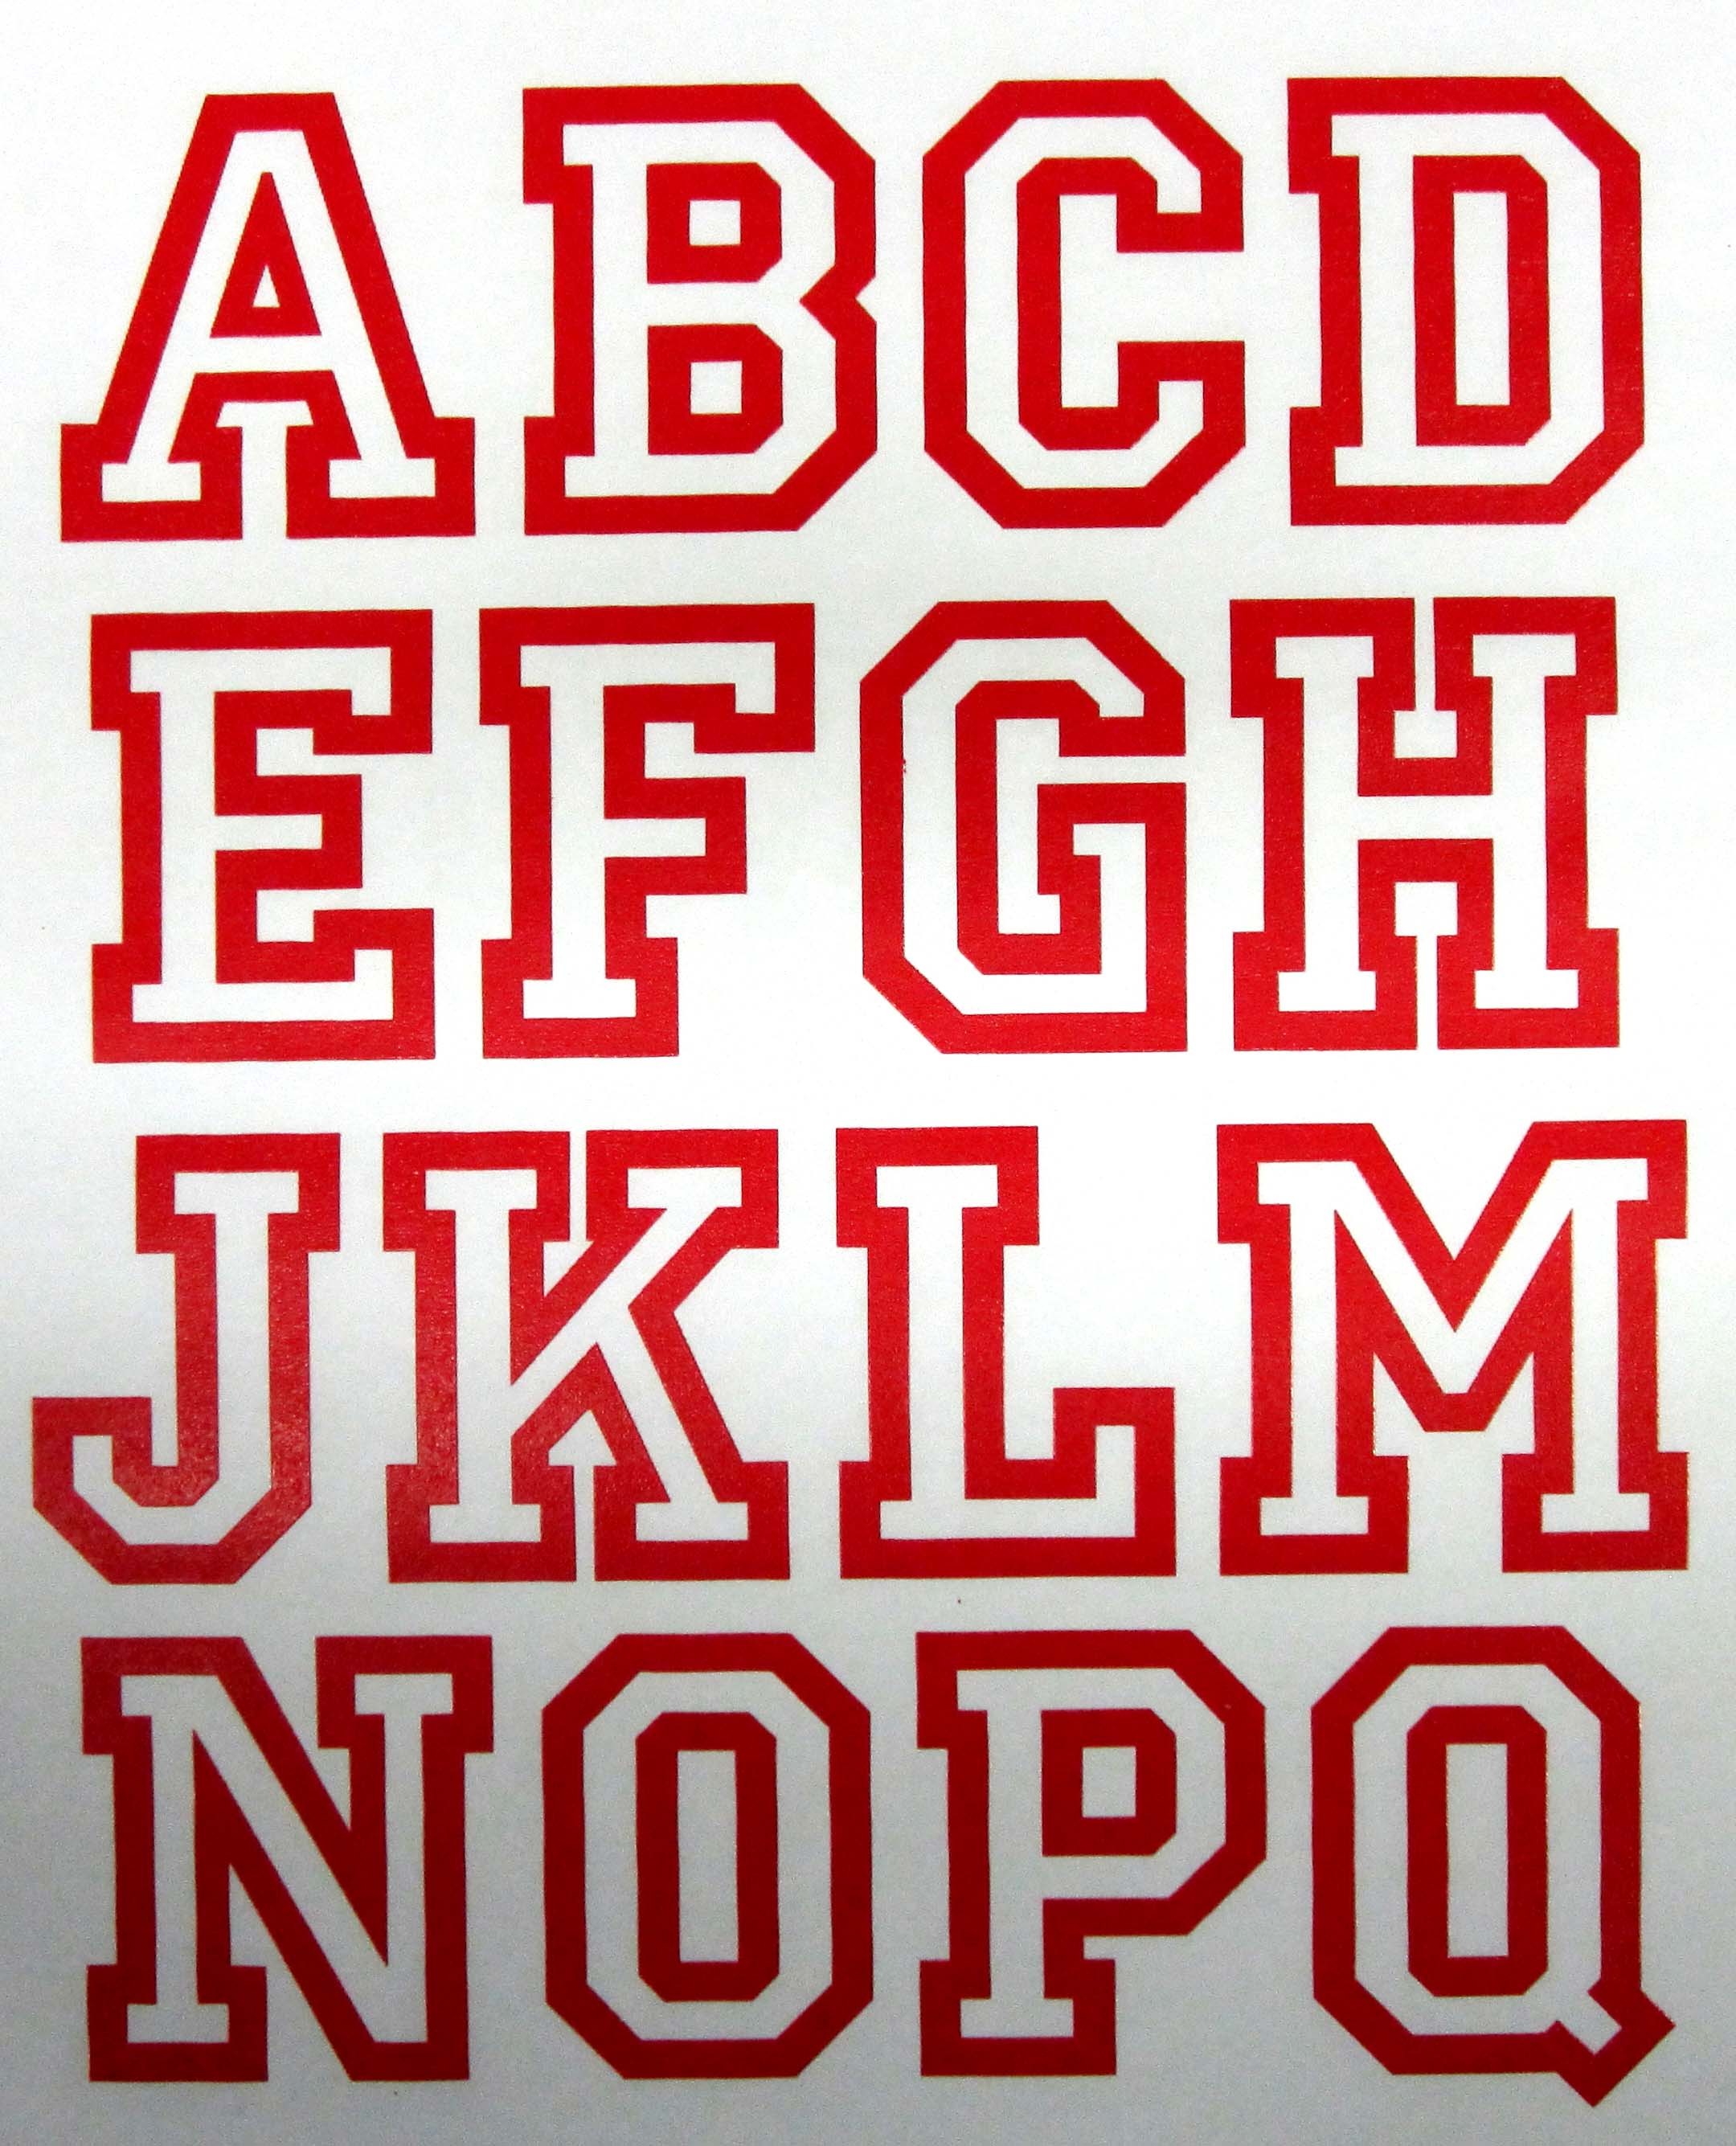 Football jersey letter font